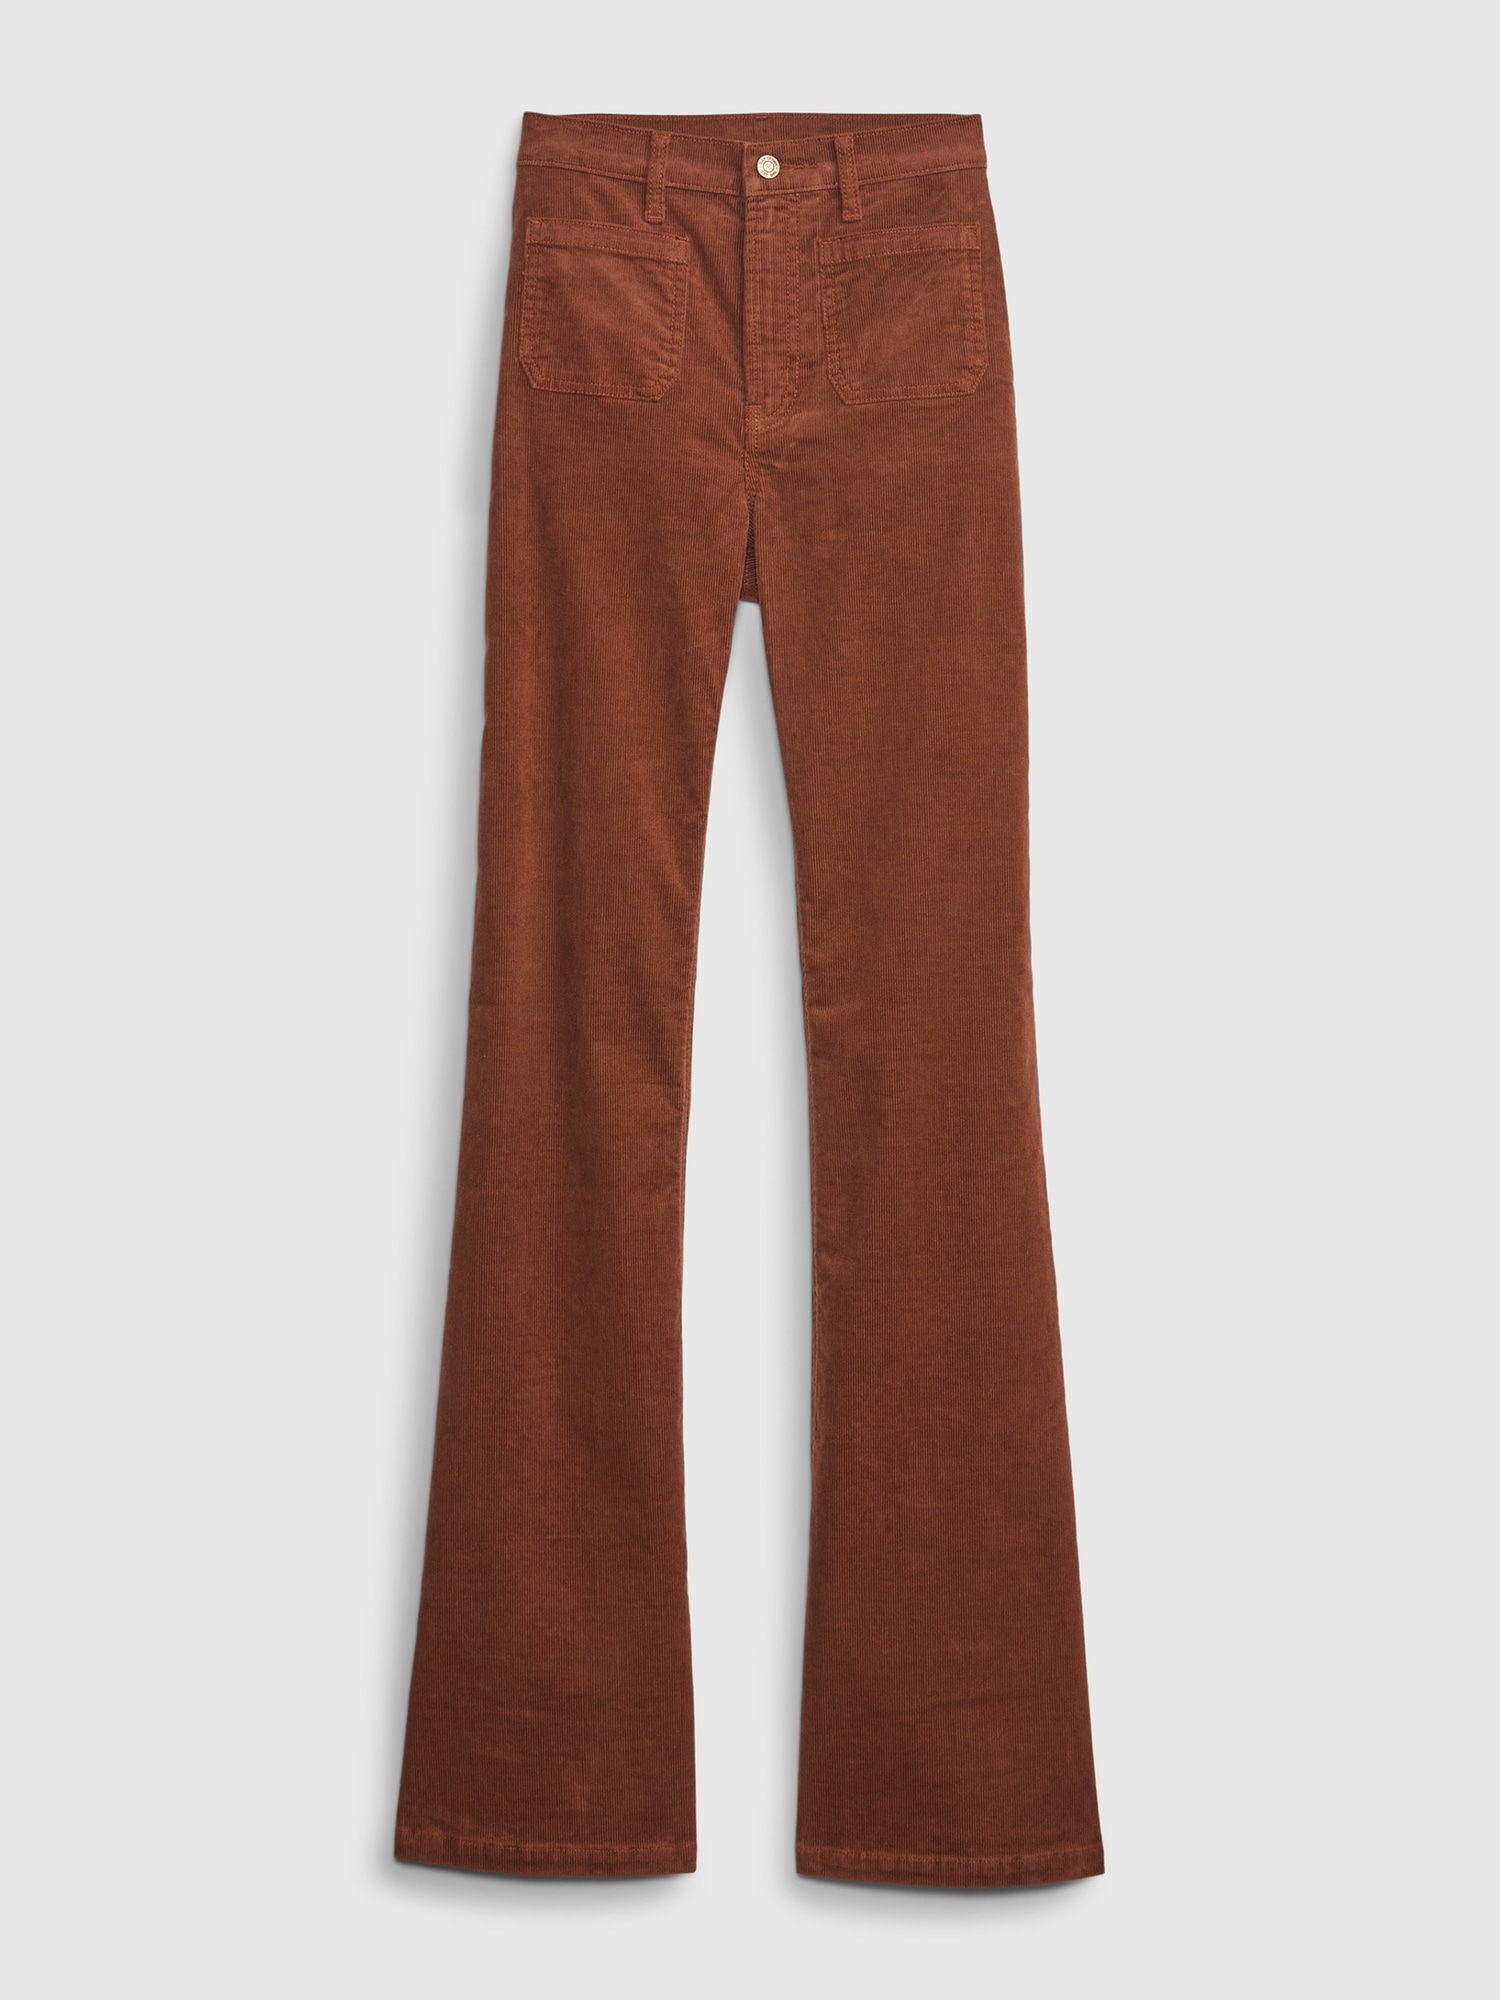 Vintage 70s Pants, 1970s Purple Corduroy Flared Leg, High Rise